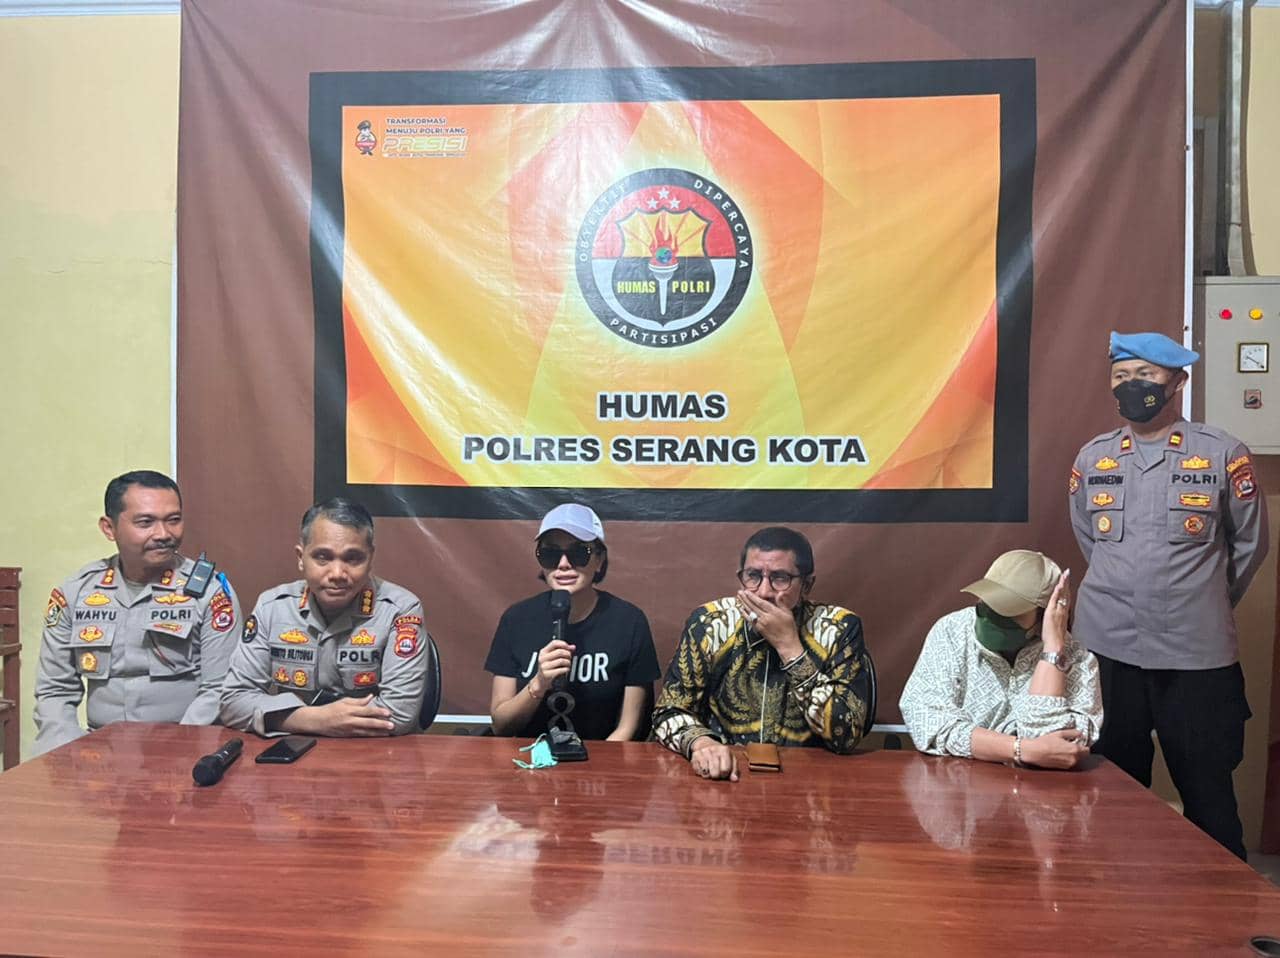 Saksi Dalam Perkara UU ITE, Nikita Mirzani Penuhi Panggilan Polresta Serang Kota